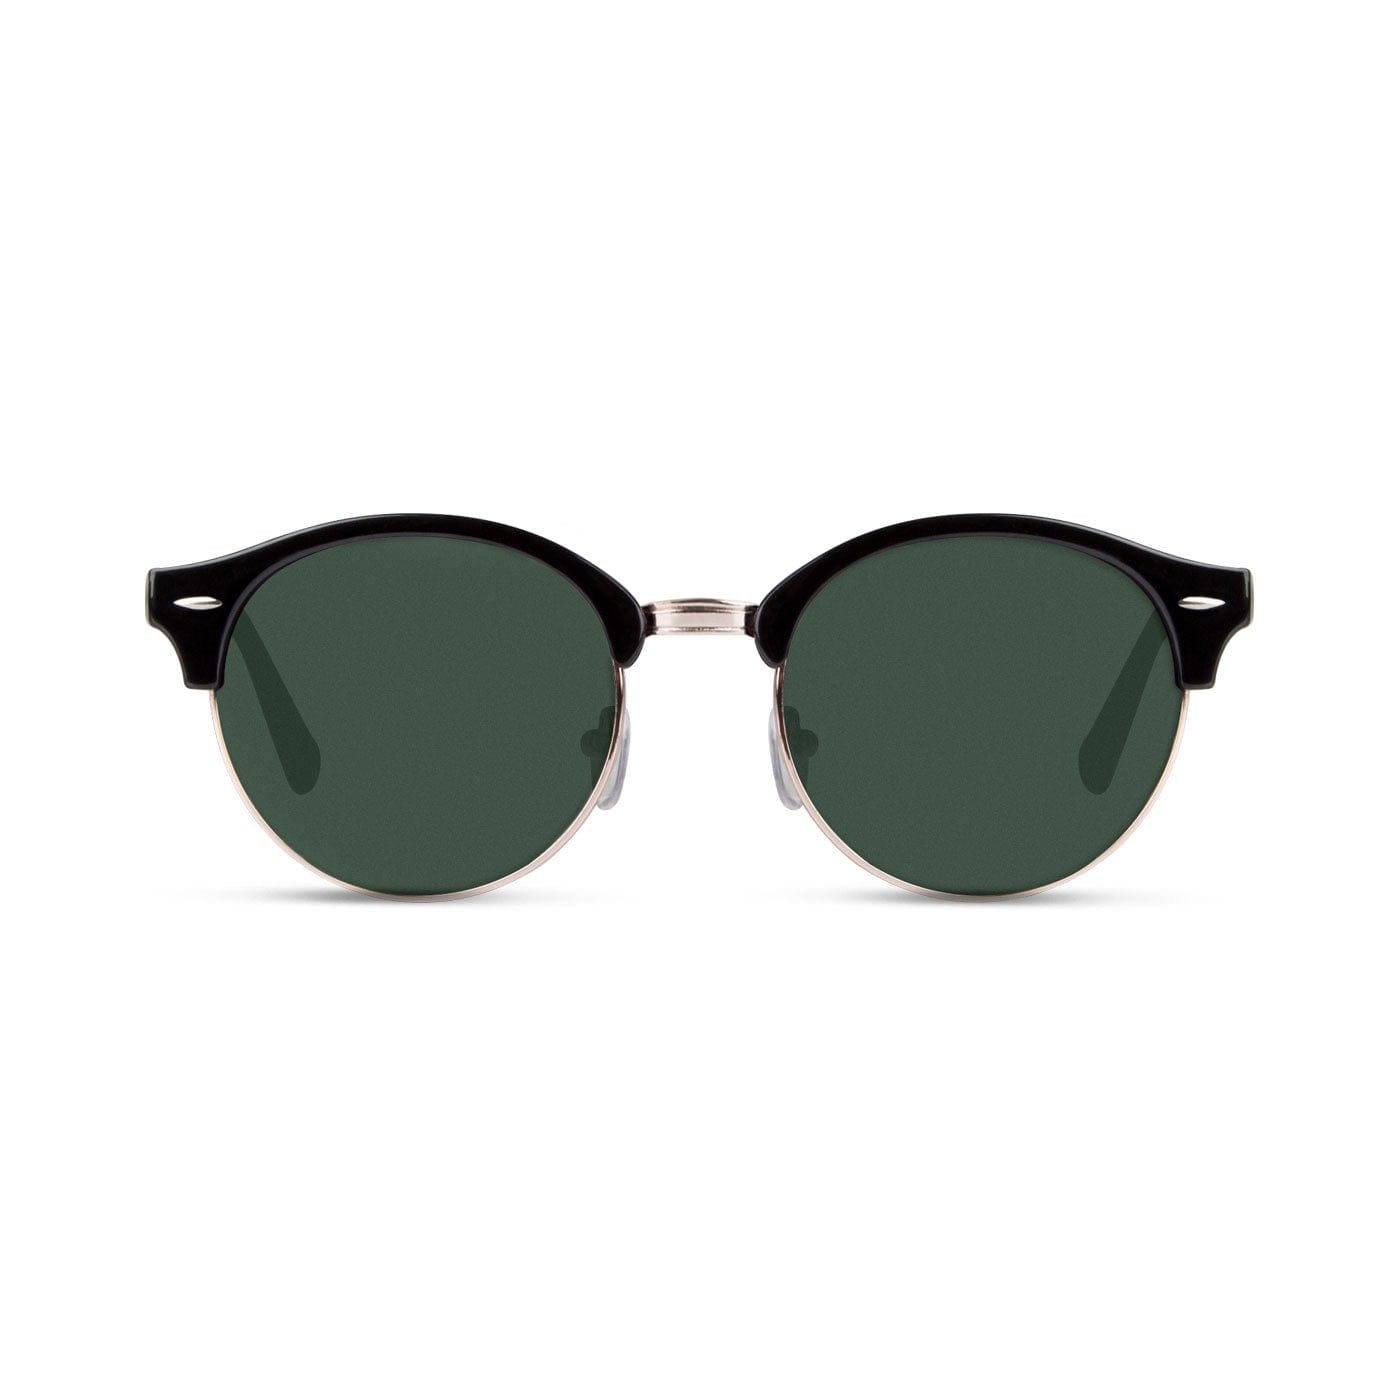 Taruta Shinny Black Gold / G15 Sunglasses